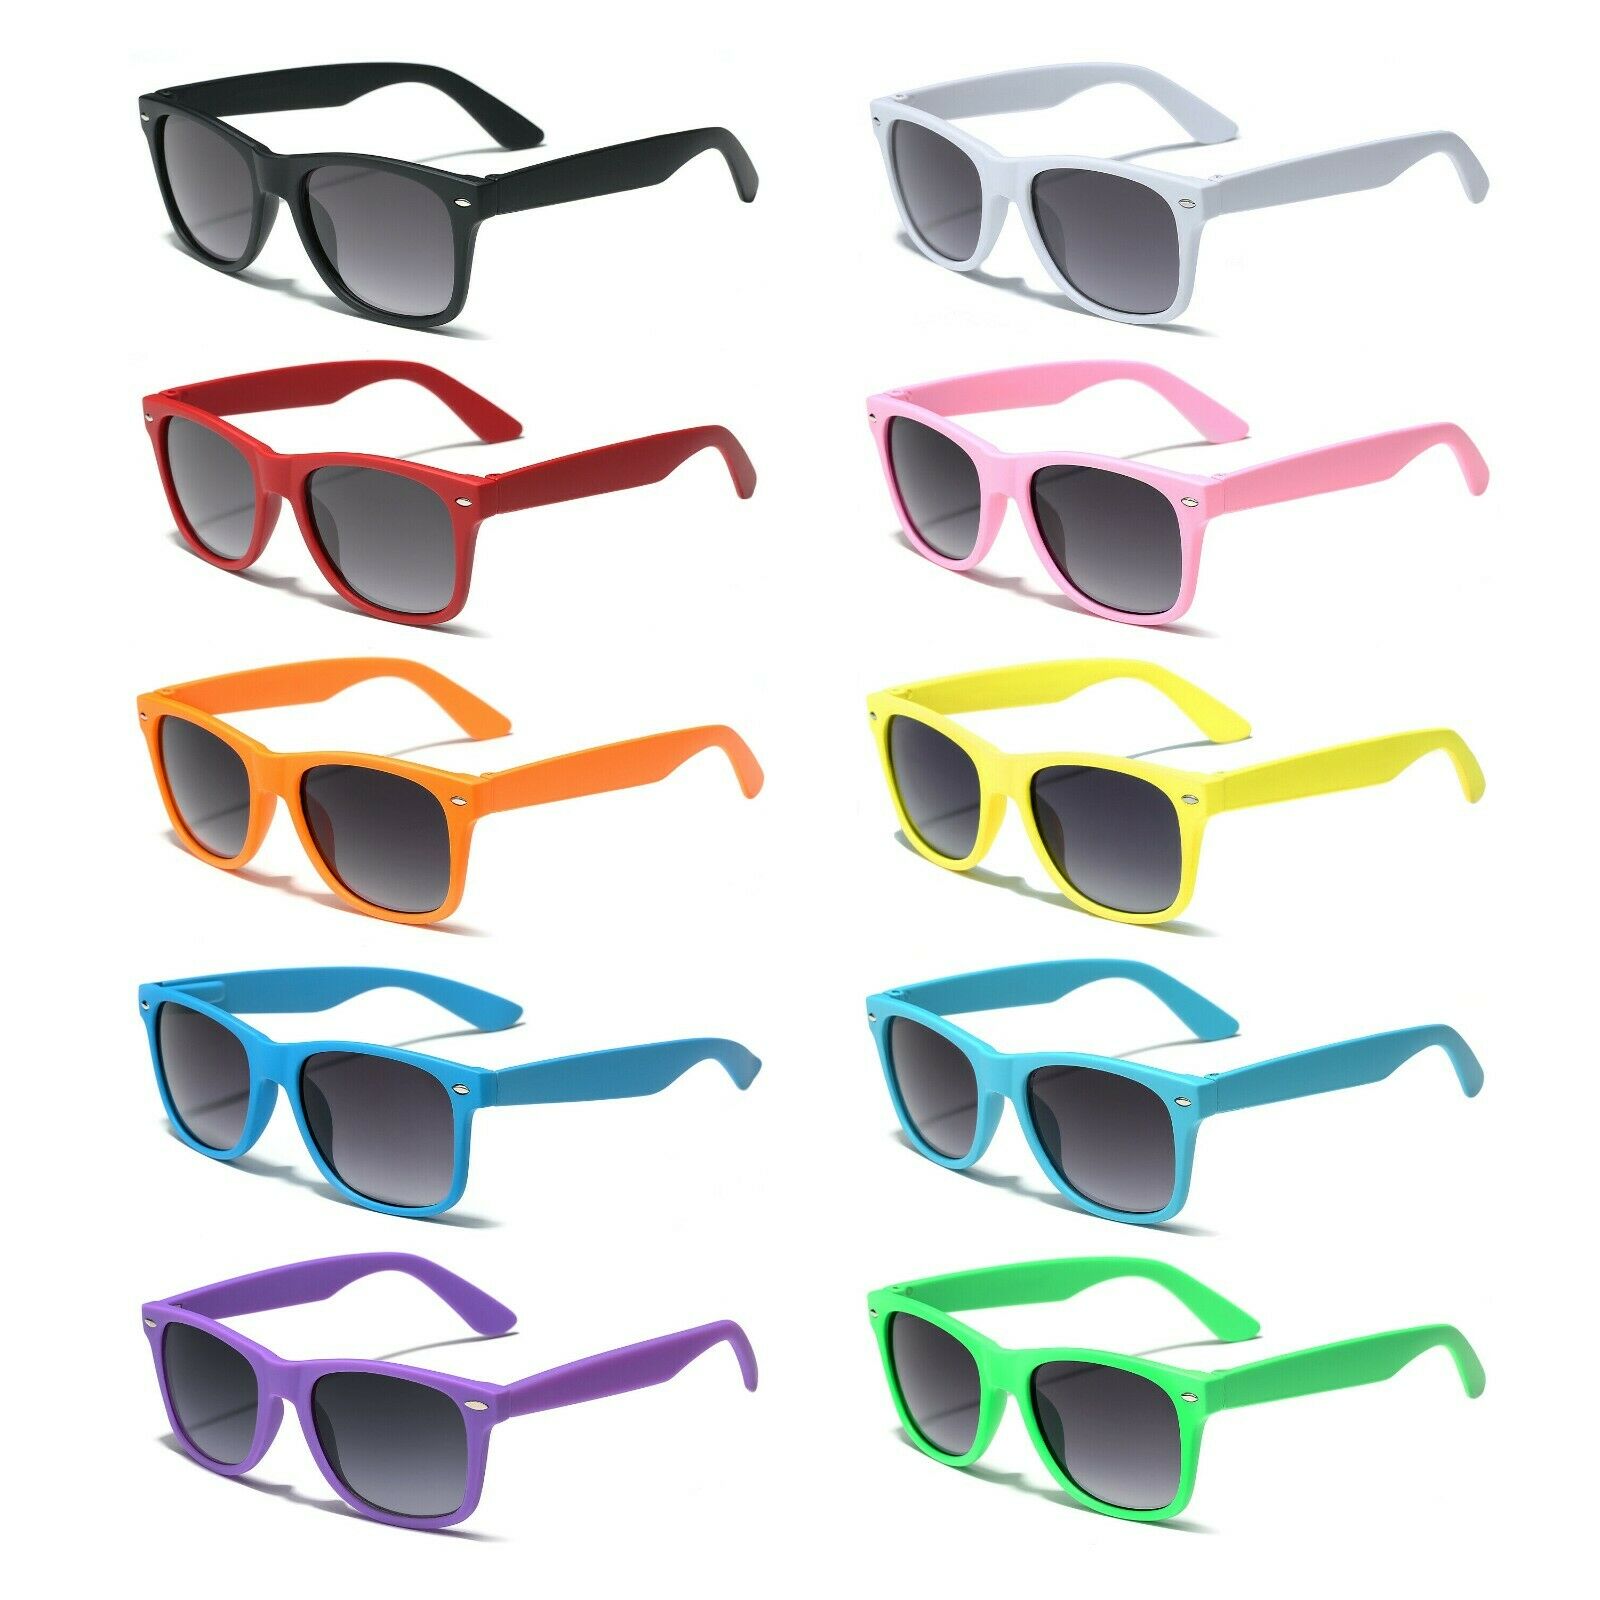 Kids Retro Sunglasses Boys Girls Rubberized Soft Frame Glasses Age 3-8